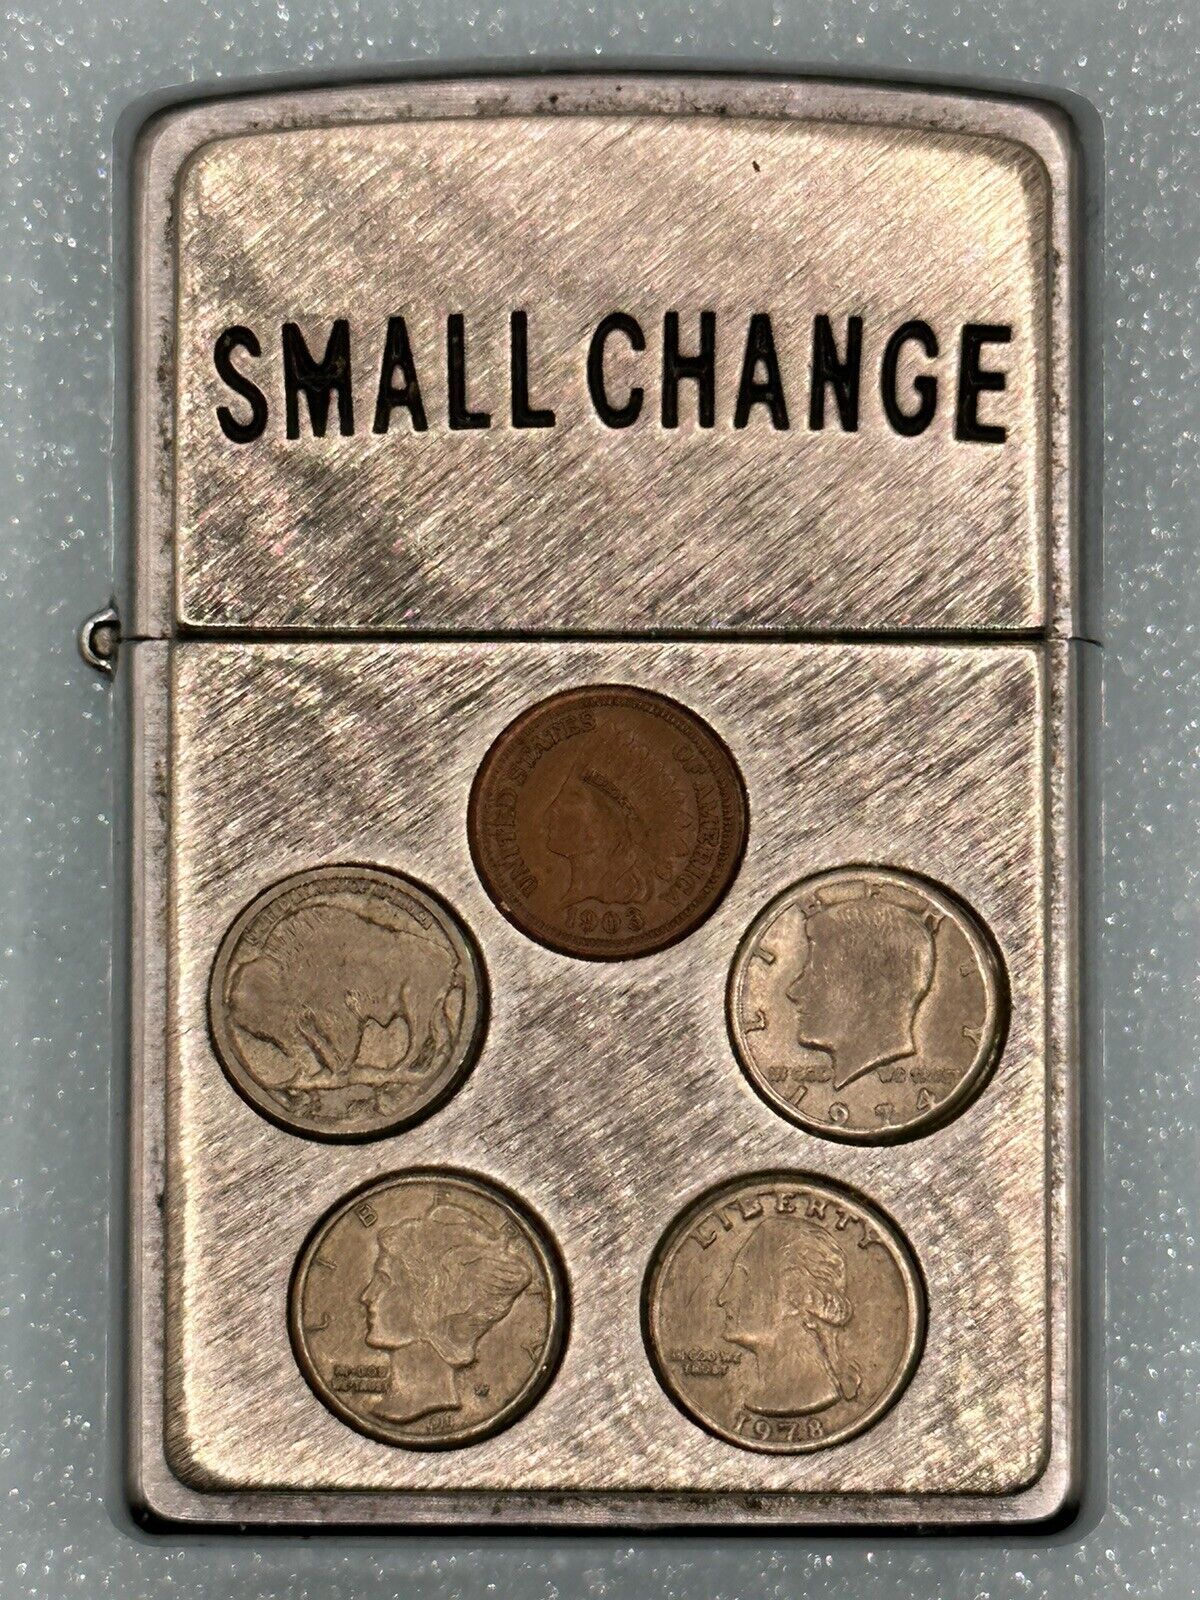 Vintage 2003 Small Change Coins Emblem Zippo Lighter